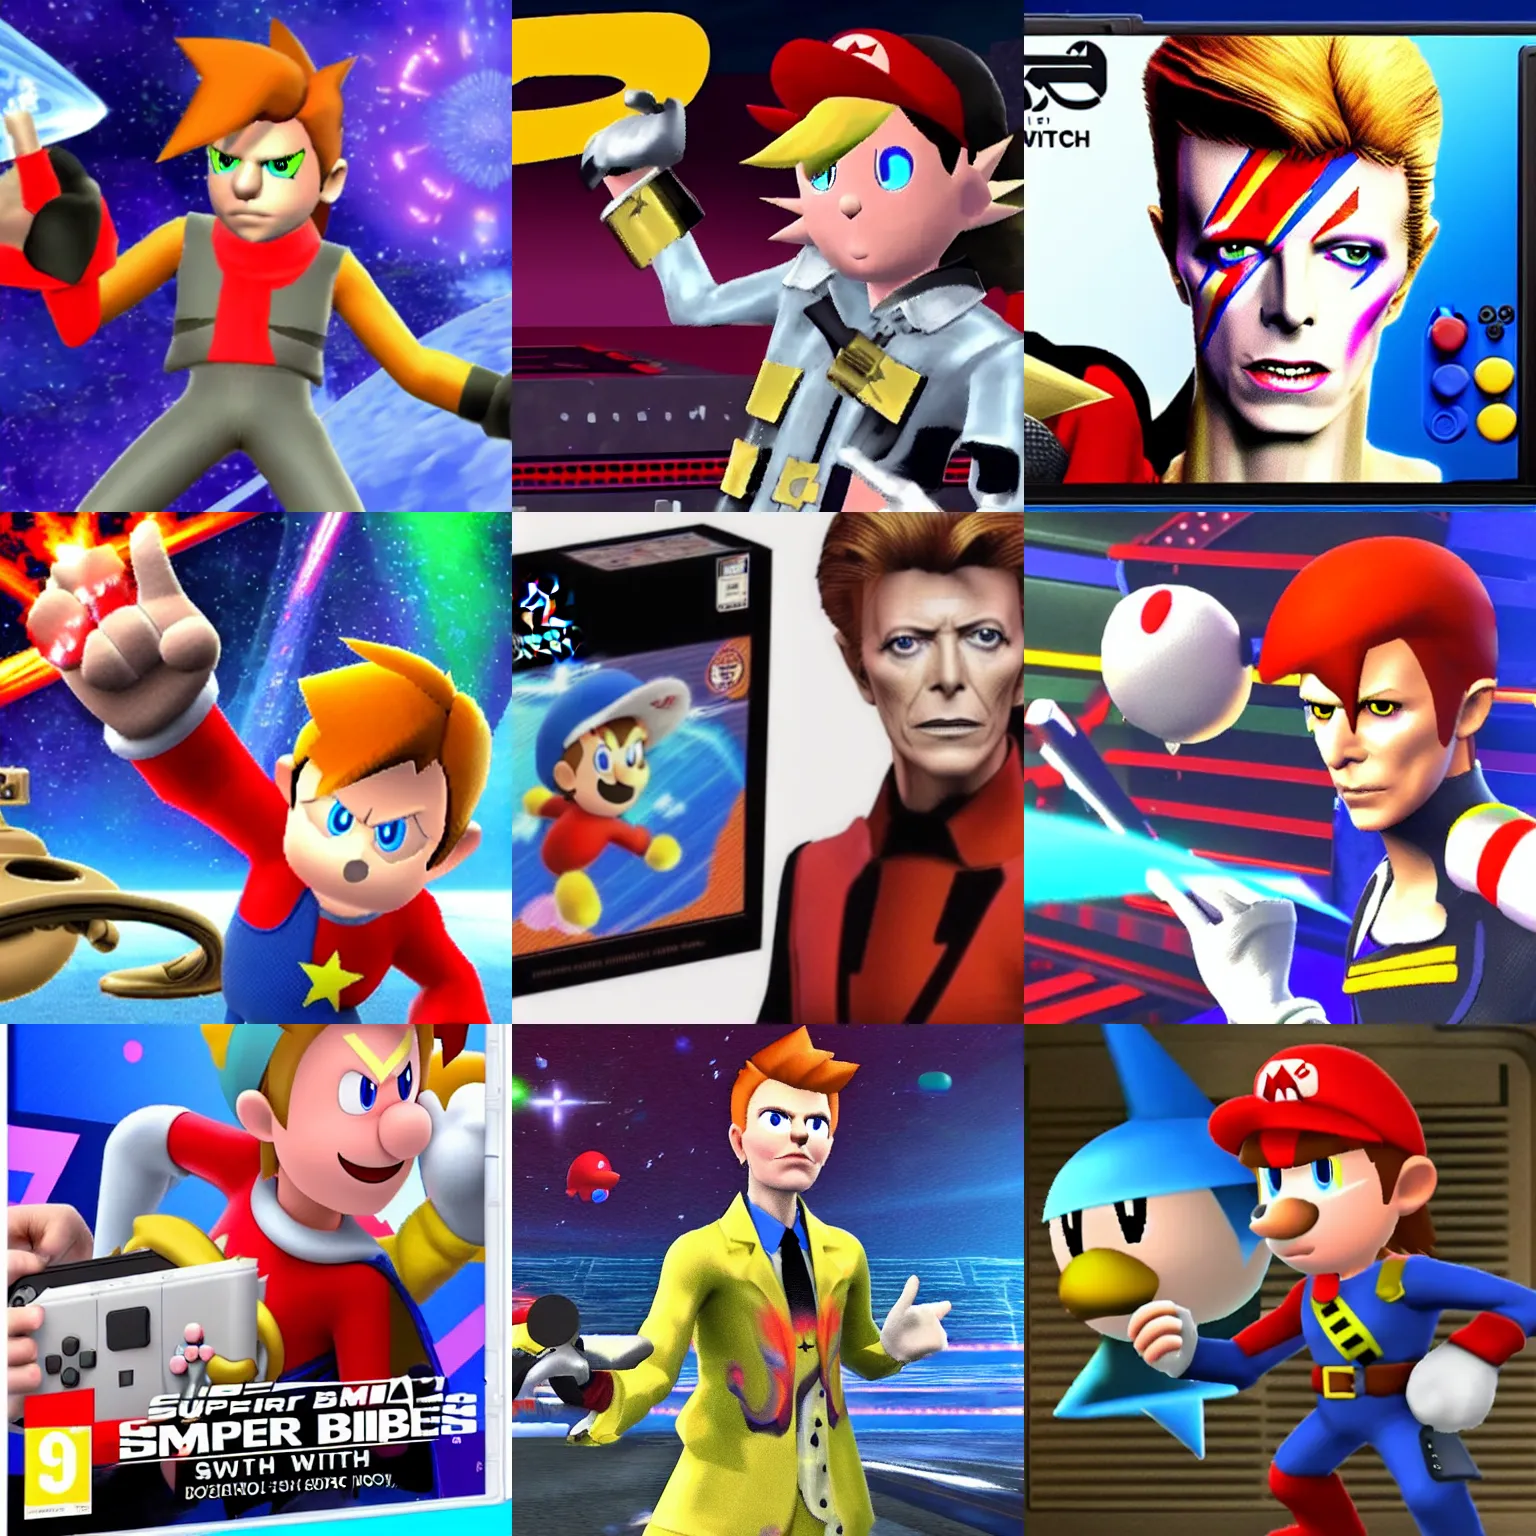 Prompt: David Bowie in Super Smash Bros, Nintendo Switch